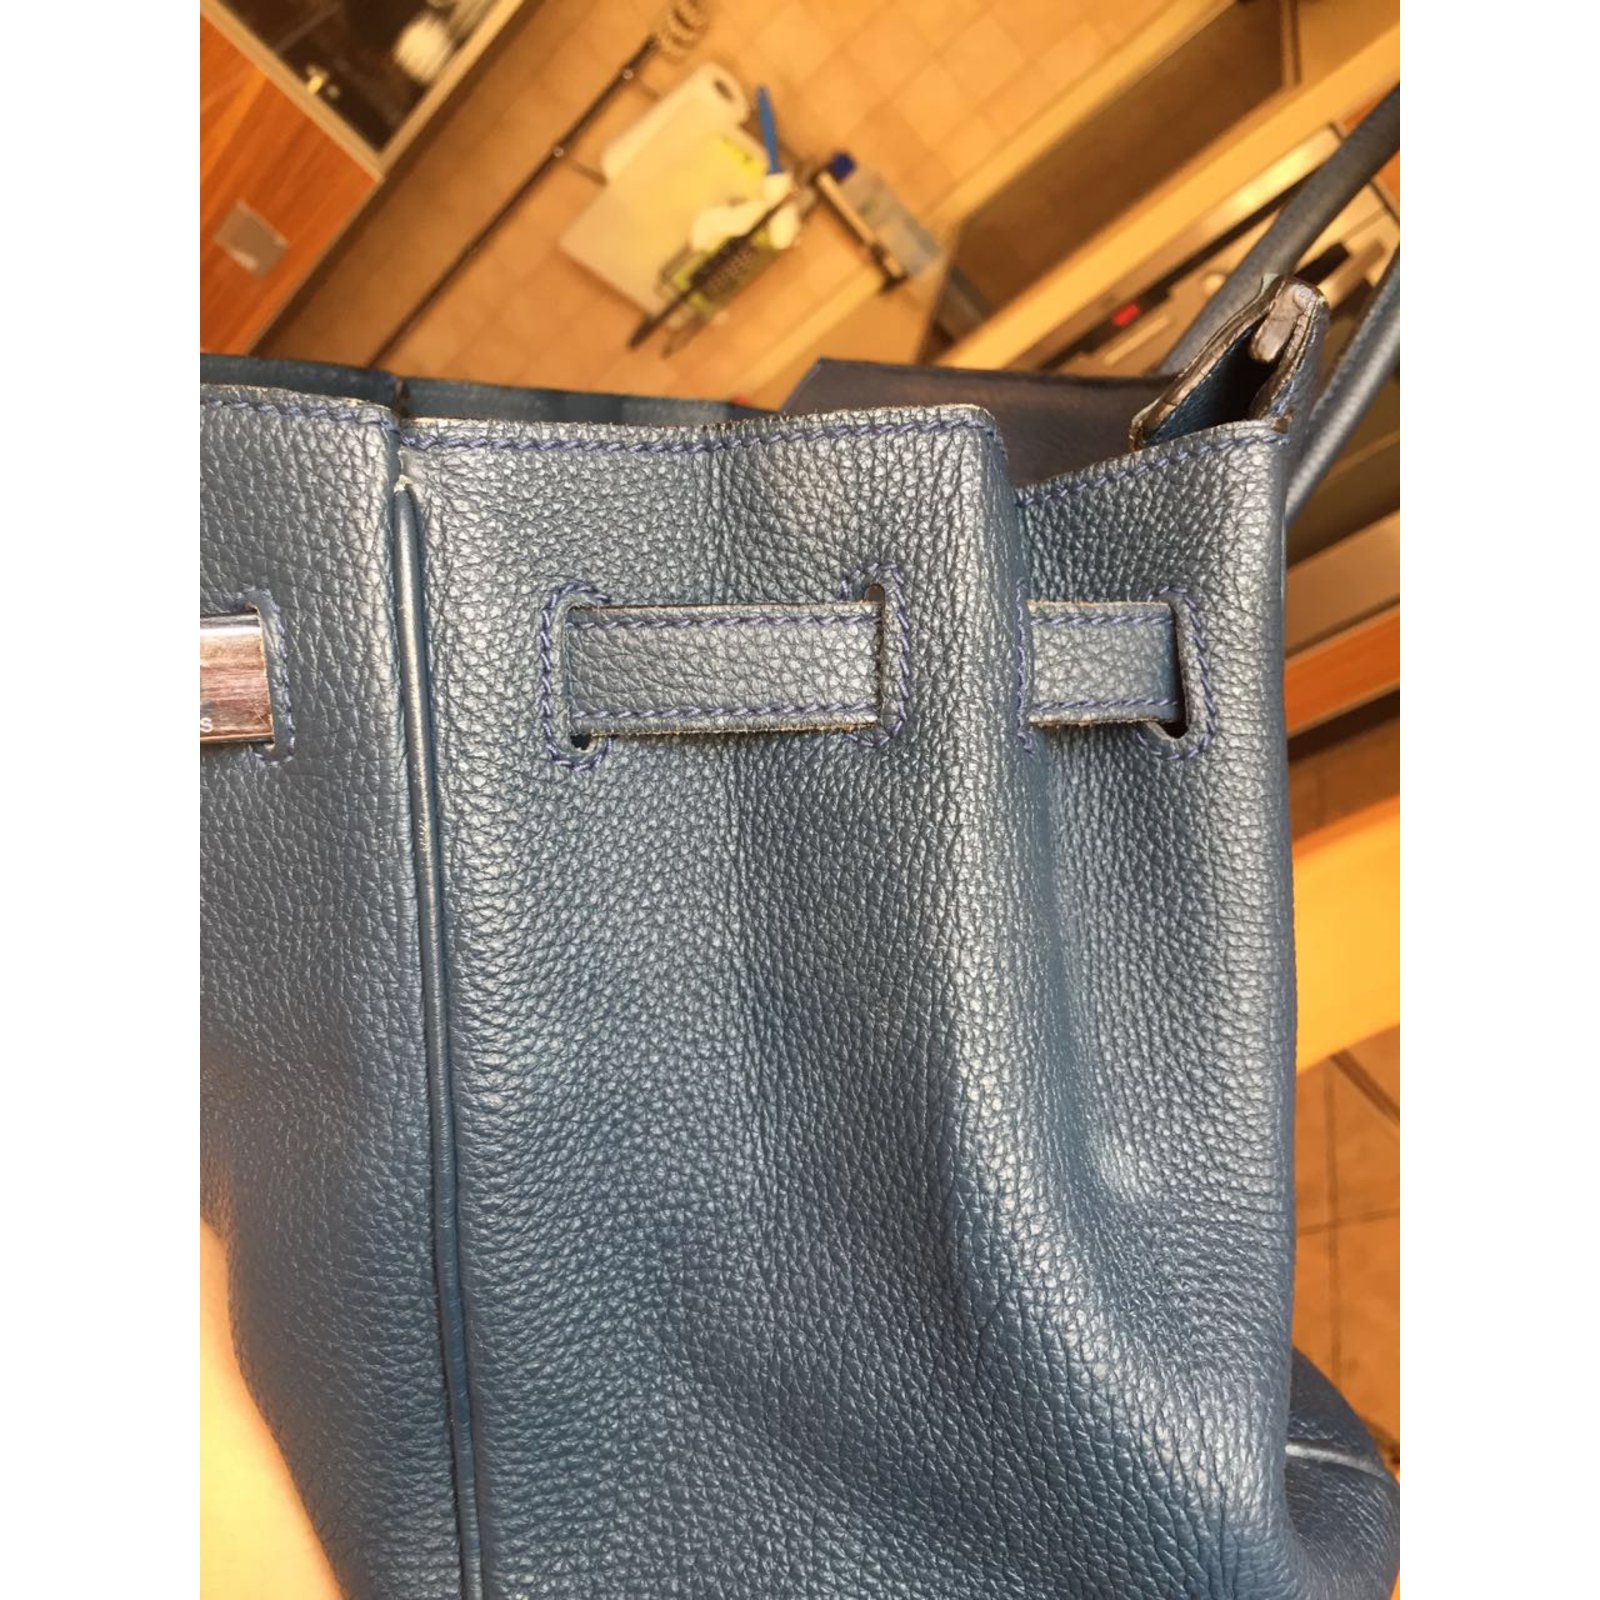 Hermes Navy Blue Clemency Leather Birkin 35